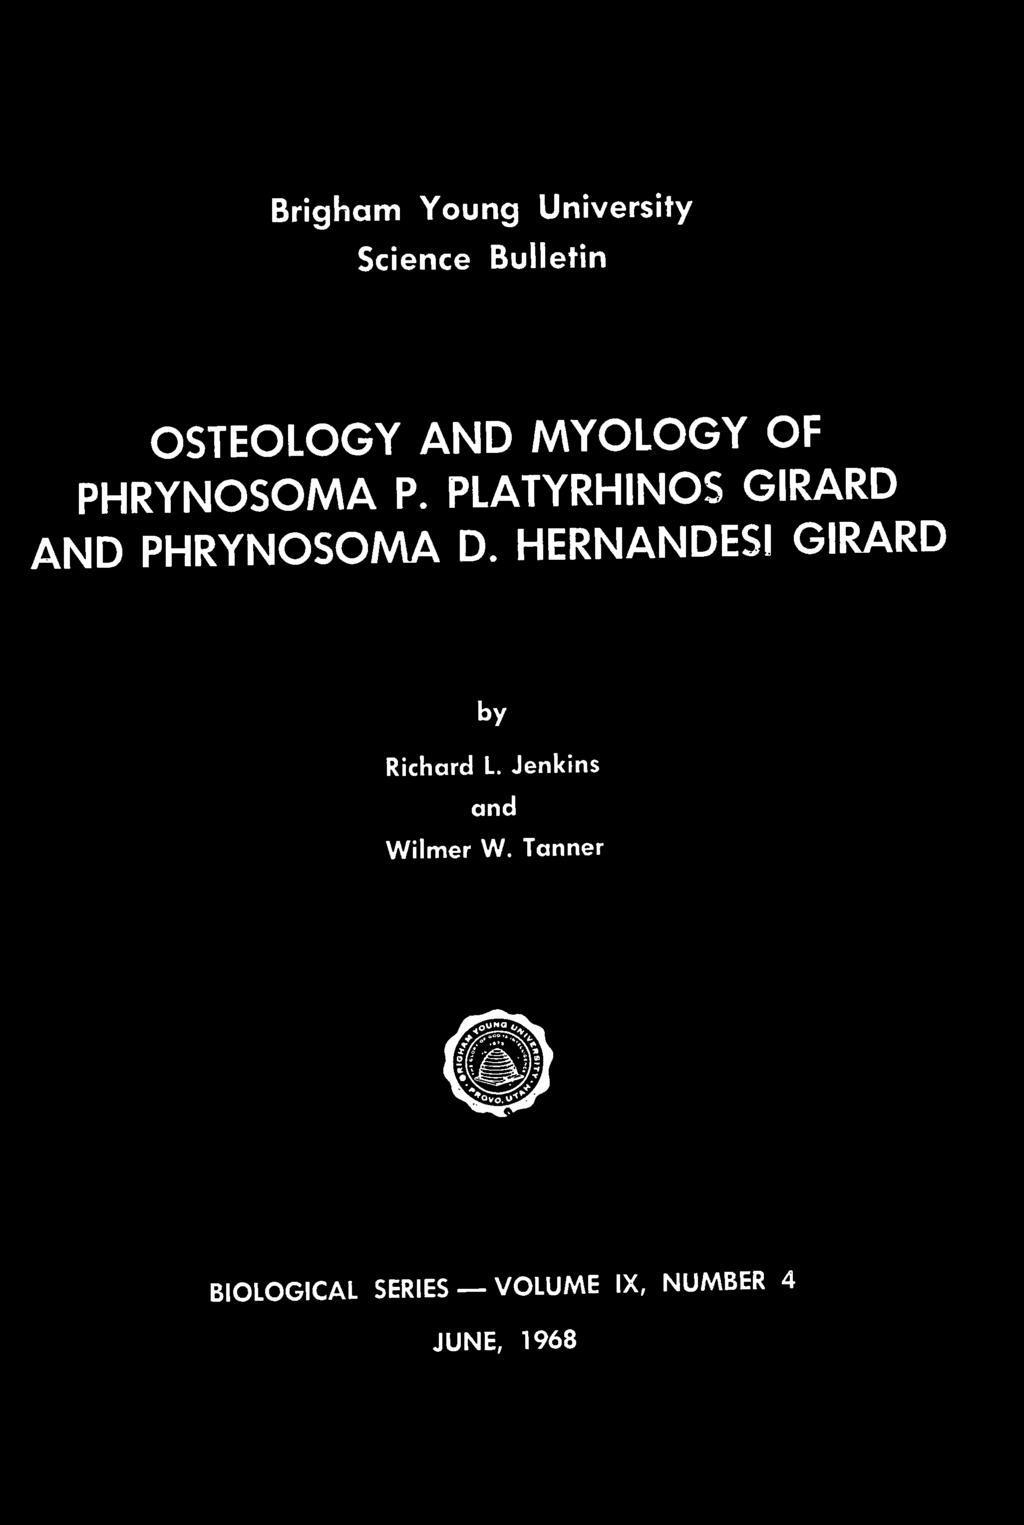 PLATYRHINOS GIRARD AND PHRYNOSOMA D.